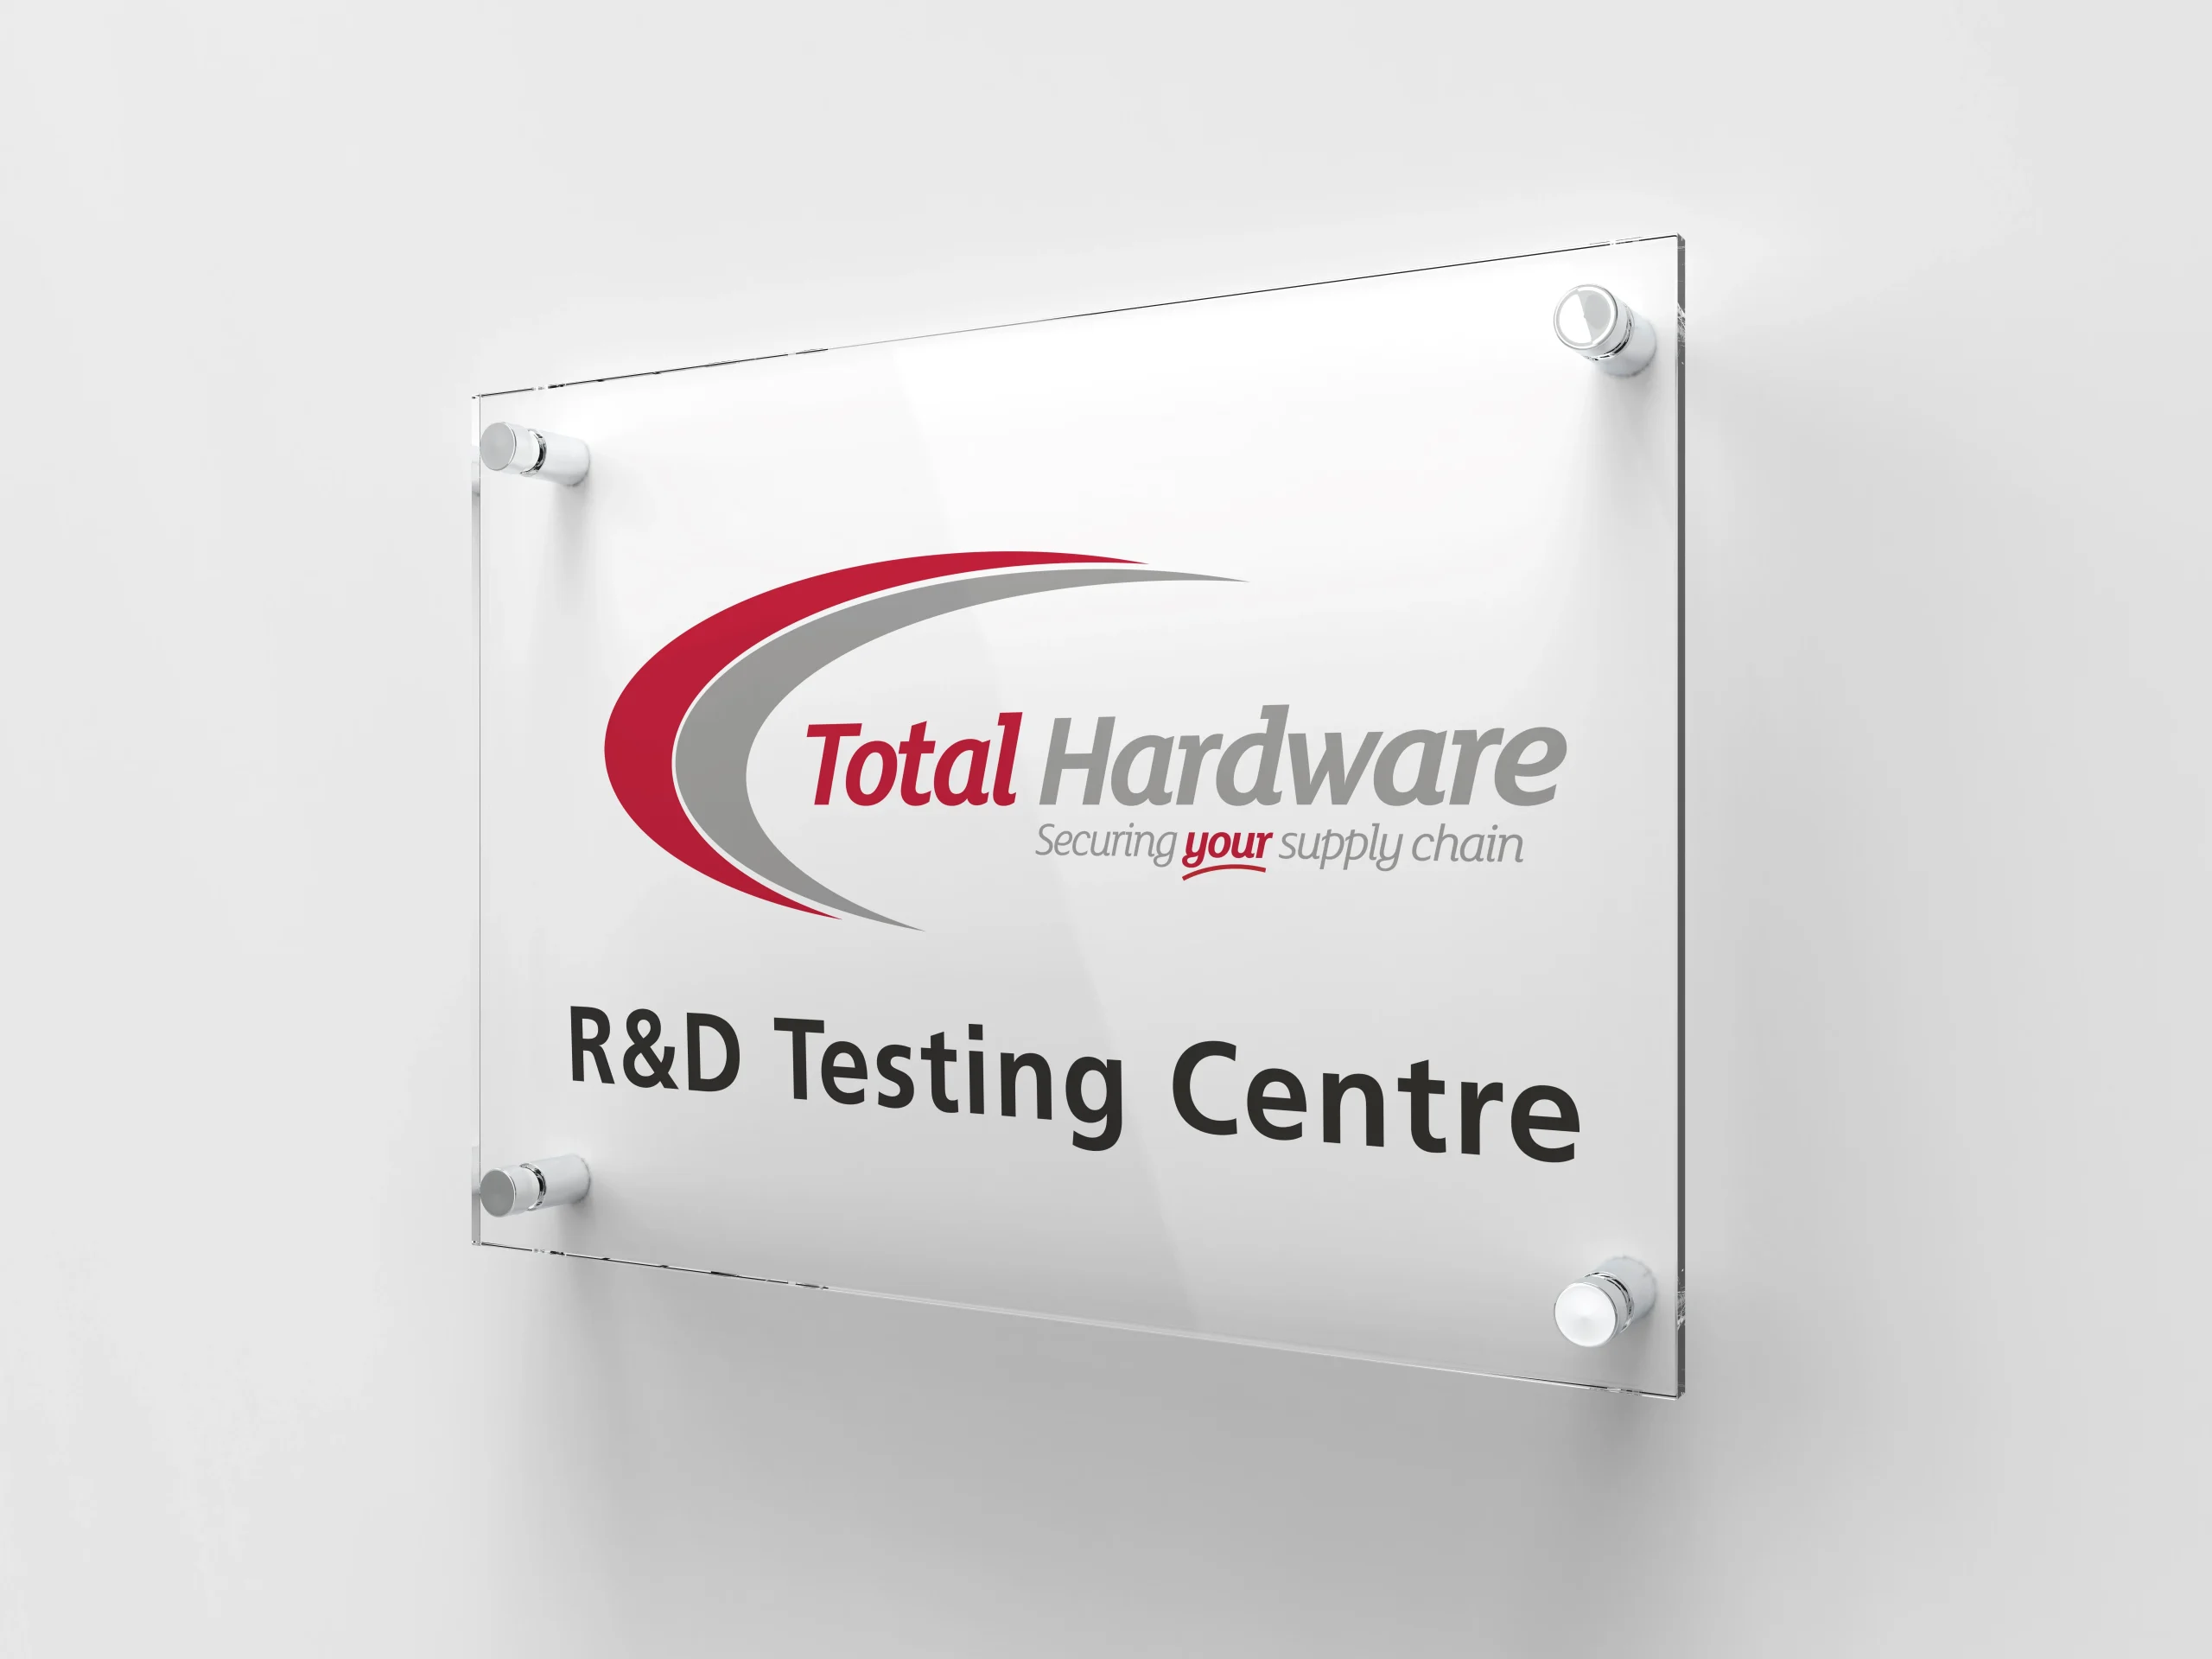 Total Hardware R&D Testing Centre